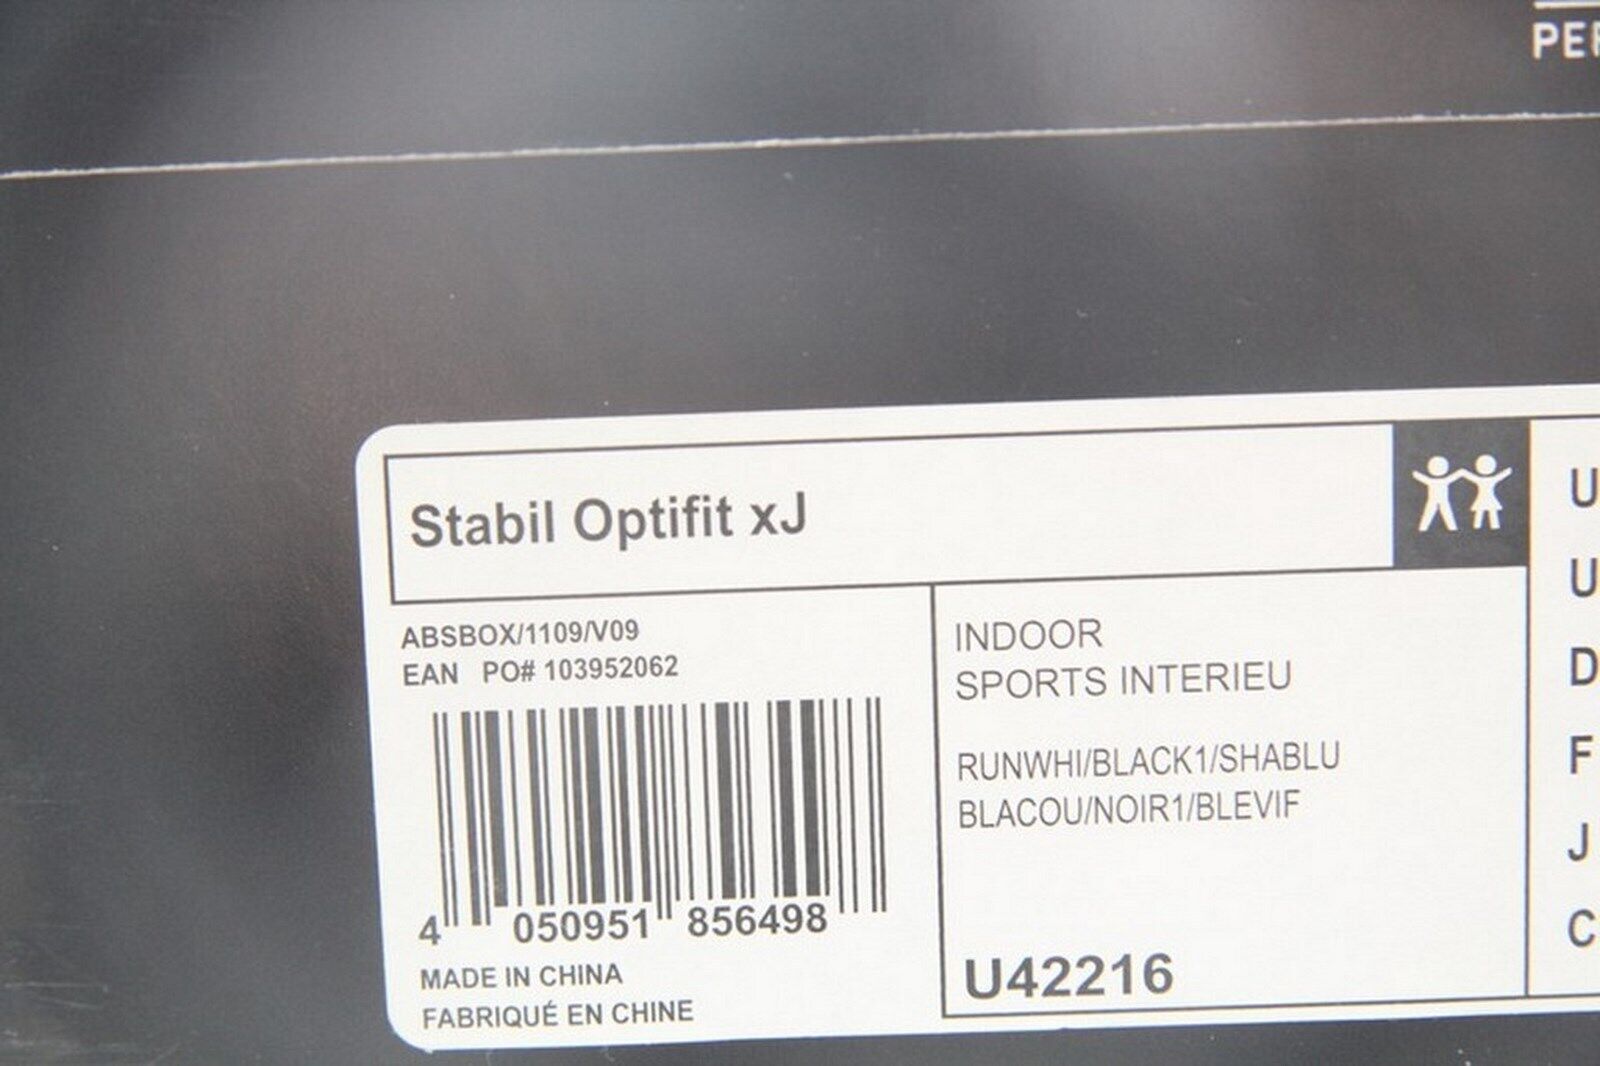 Absorbente Shuraba disparar Chaussure ADIDAS STABIL OPTIFIT XJ speedcut T: 32 blanc UK 13.5 kid U42216  | eBay